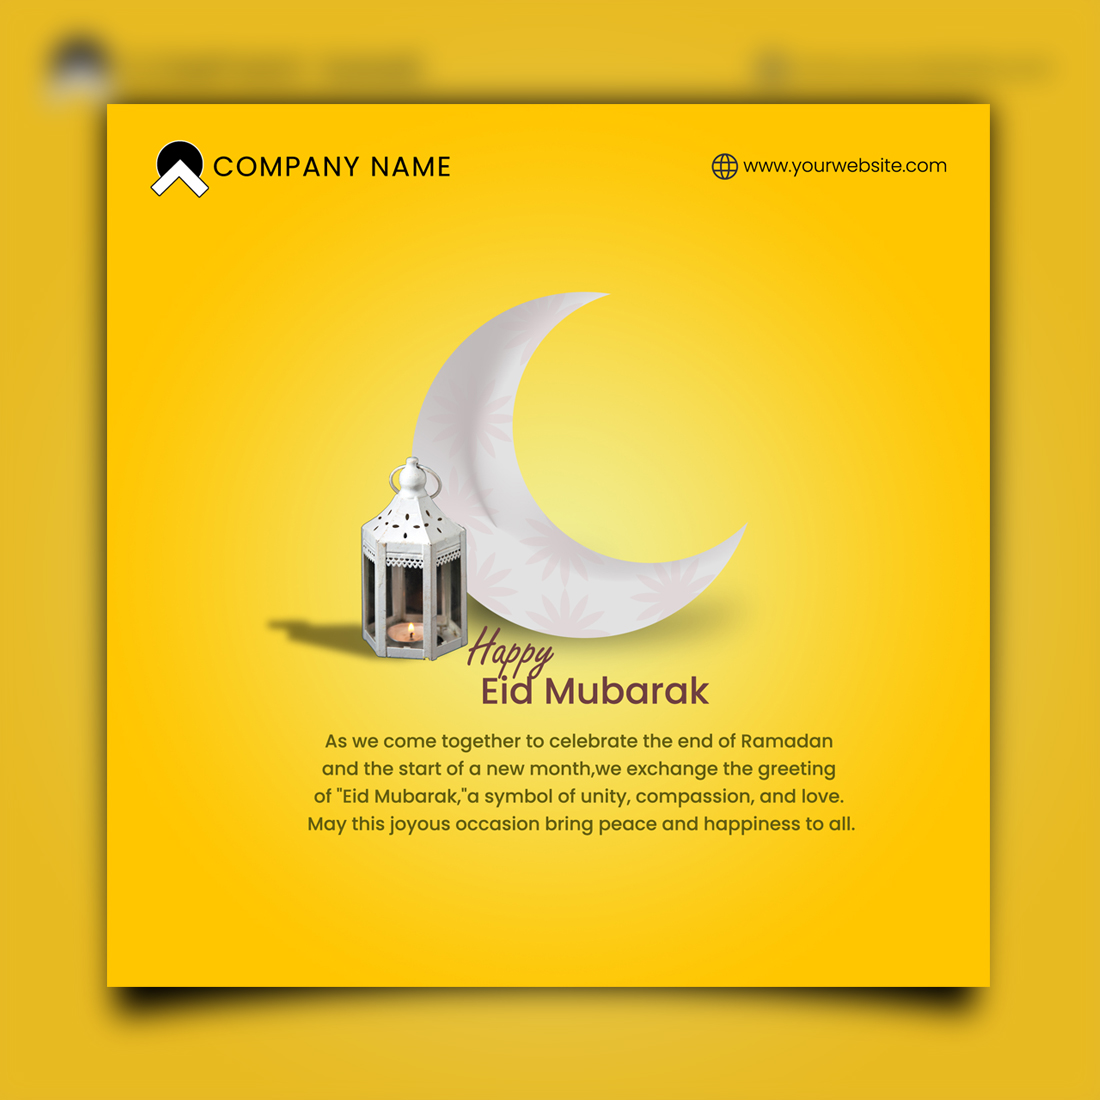 Eid Mubarak Tamplate cover image.